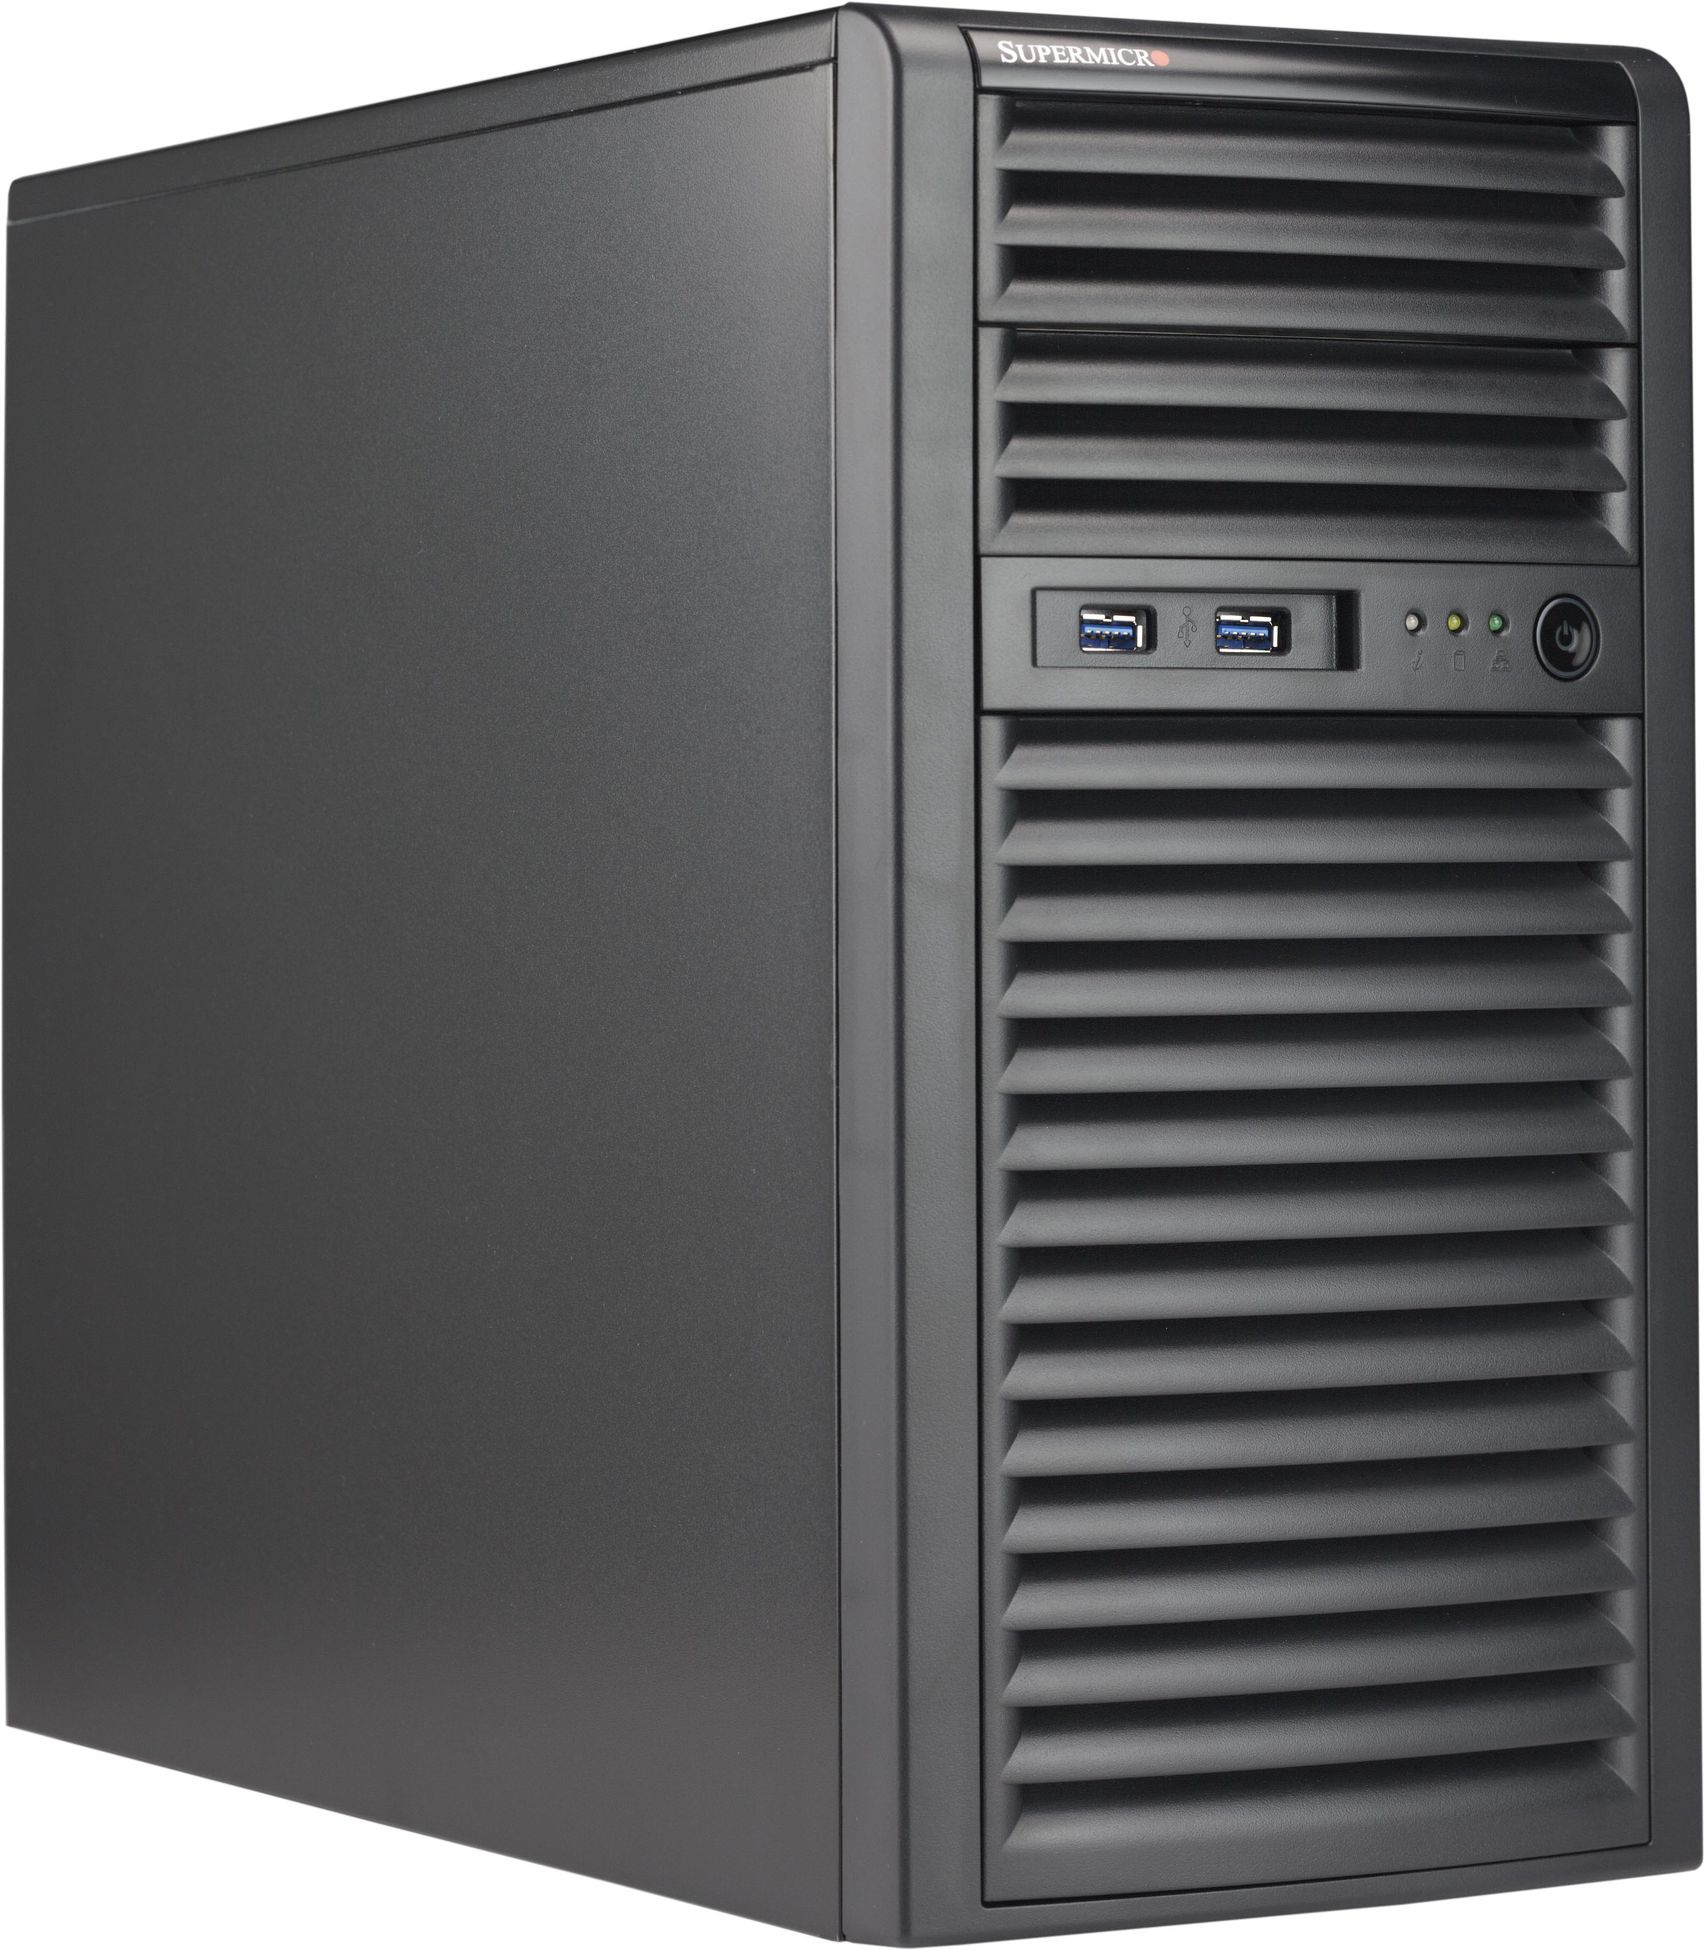 Изображение Сервер Supermicro 5039D Xeon E3-1220v6 16Gb 2133P DDR4 4x noHDD 3.5" SATA , RAID C232 , PSU 300W